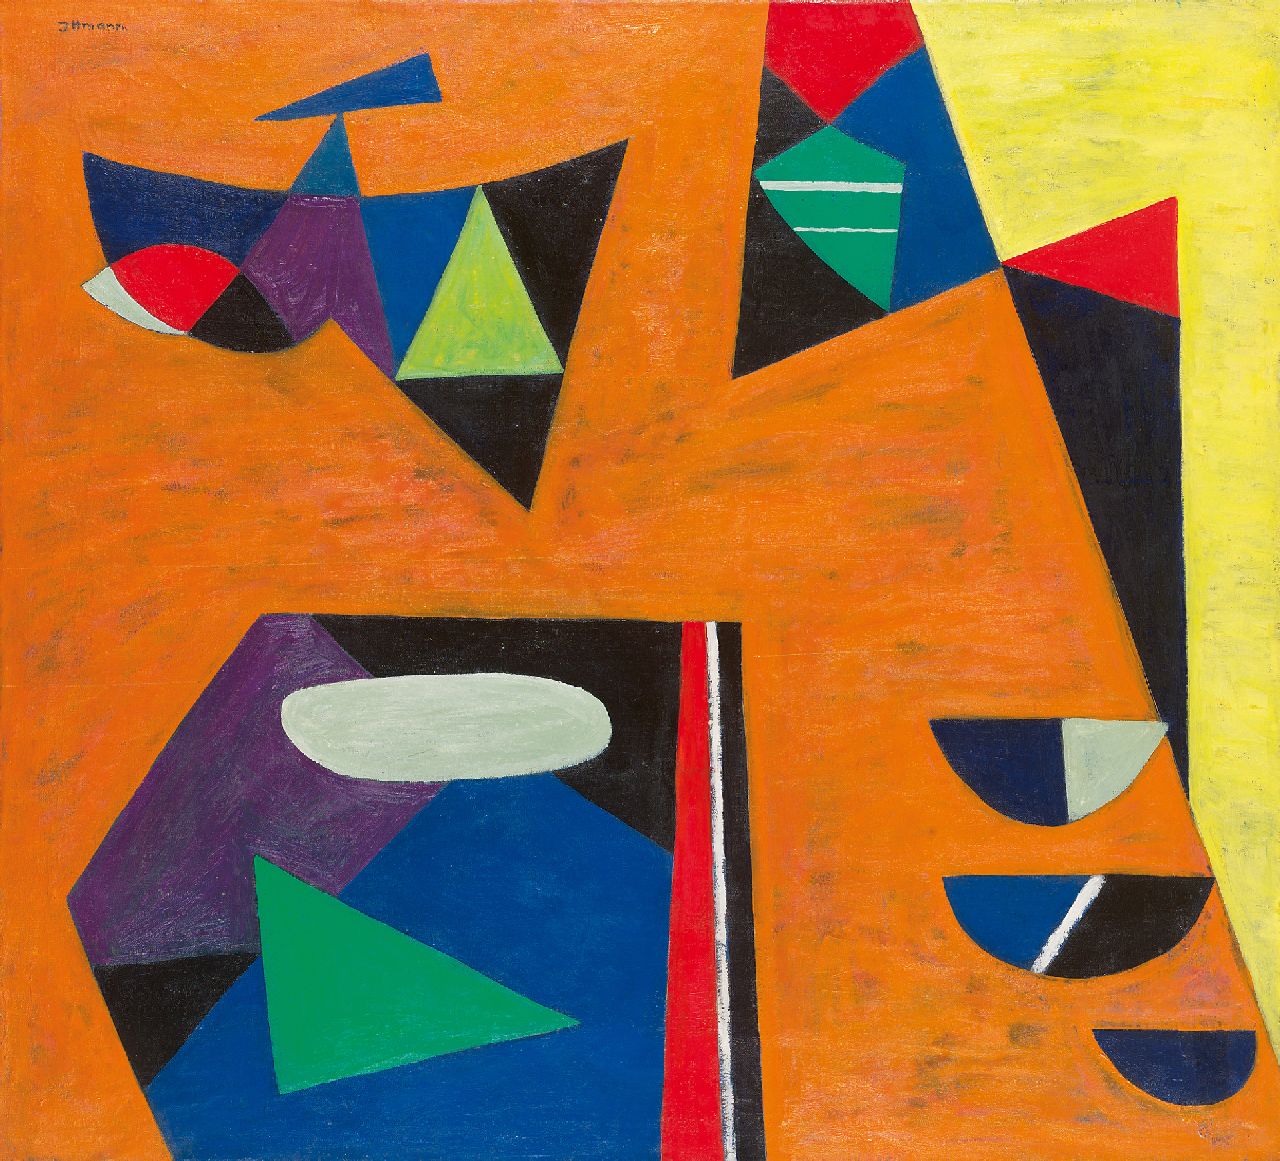 Ittmann H.  | Hans Ittmann, Abstracte compositie, olieverf op doek 90,0 x 100,0 cm, gesigneerd linksboven